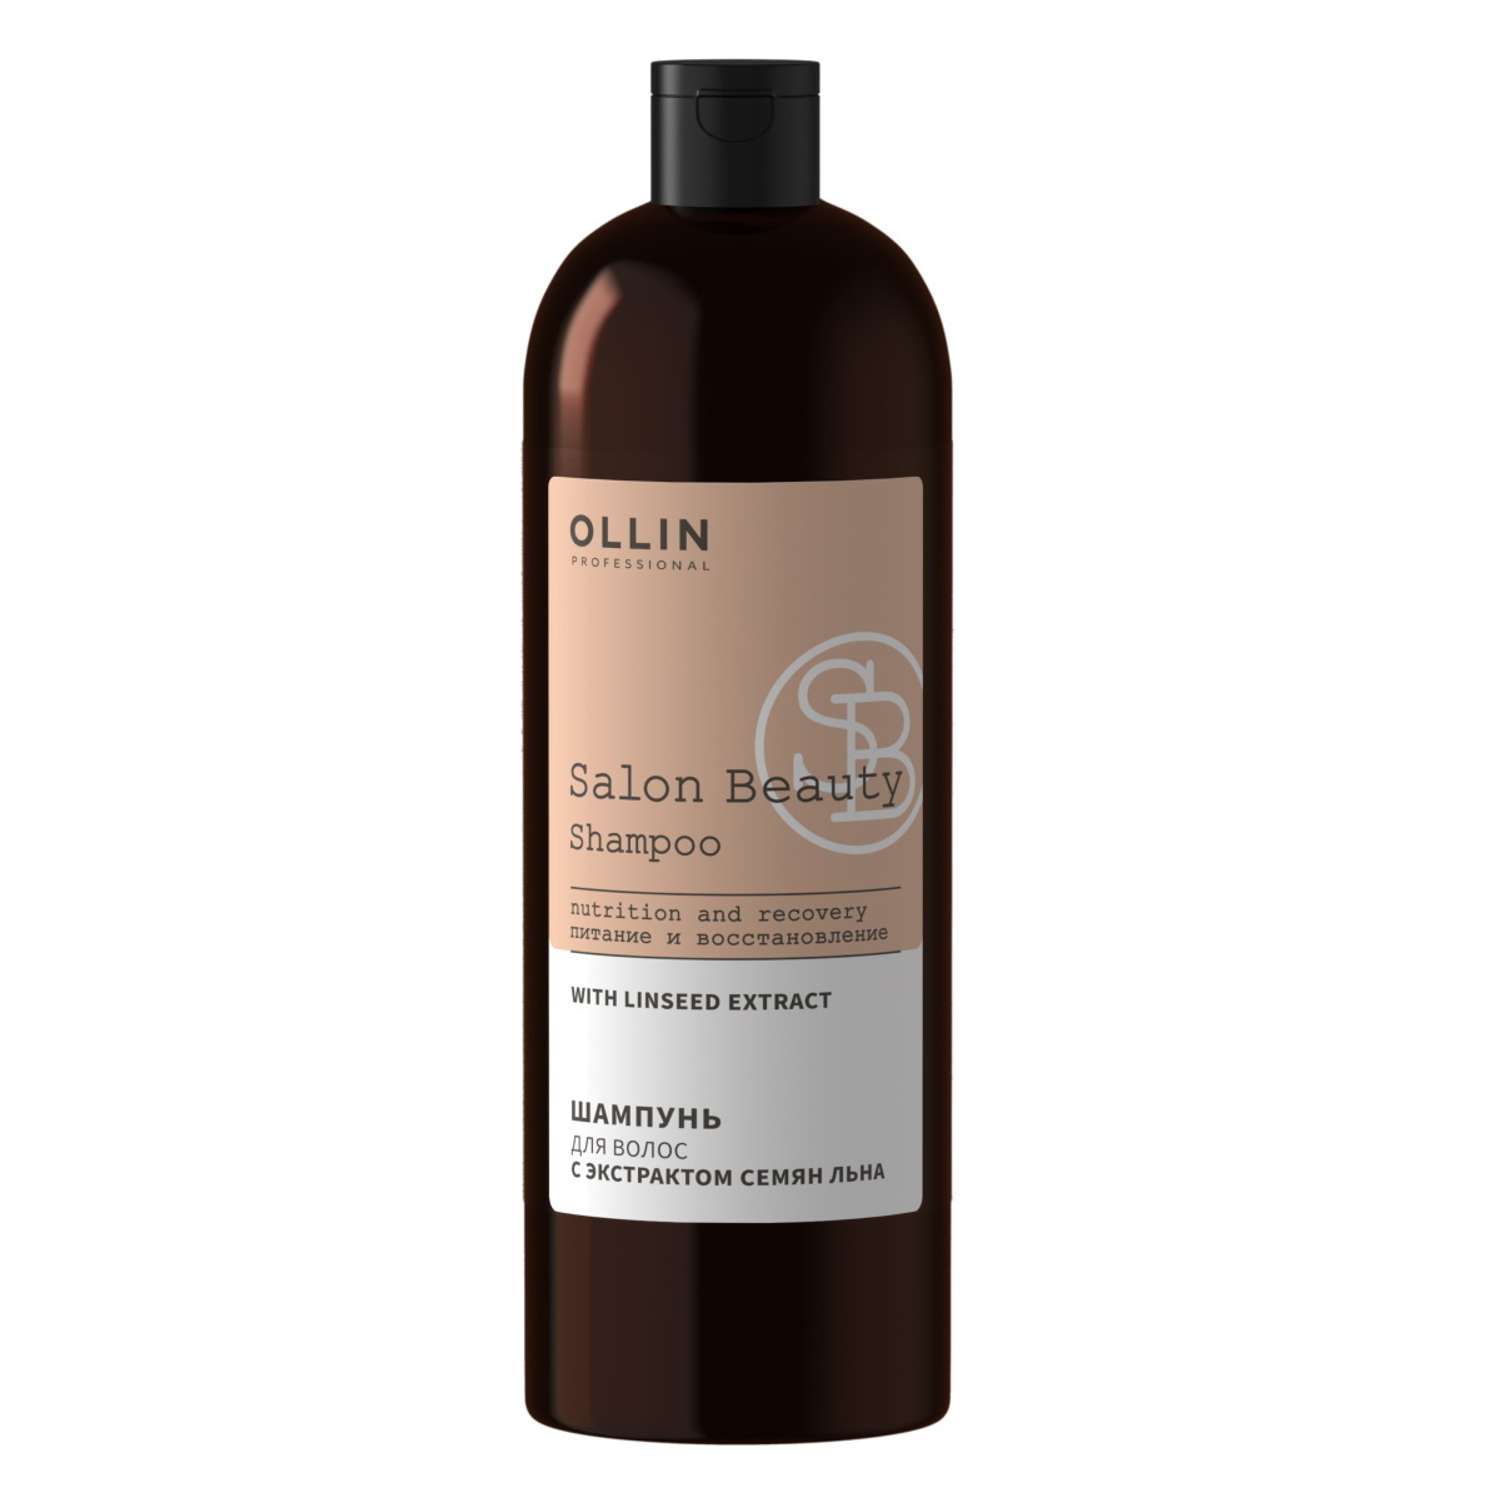 Шампунь Ollin salon beauty для ухода за волосами с экстрактом семян льна 1000 мл - фото 1